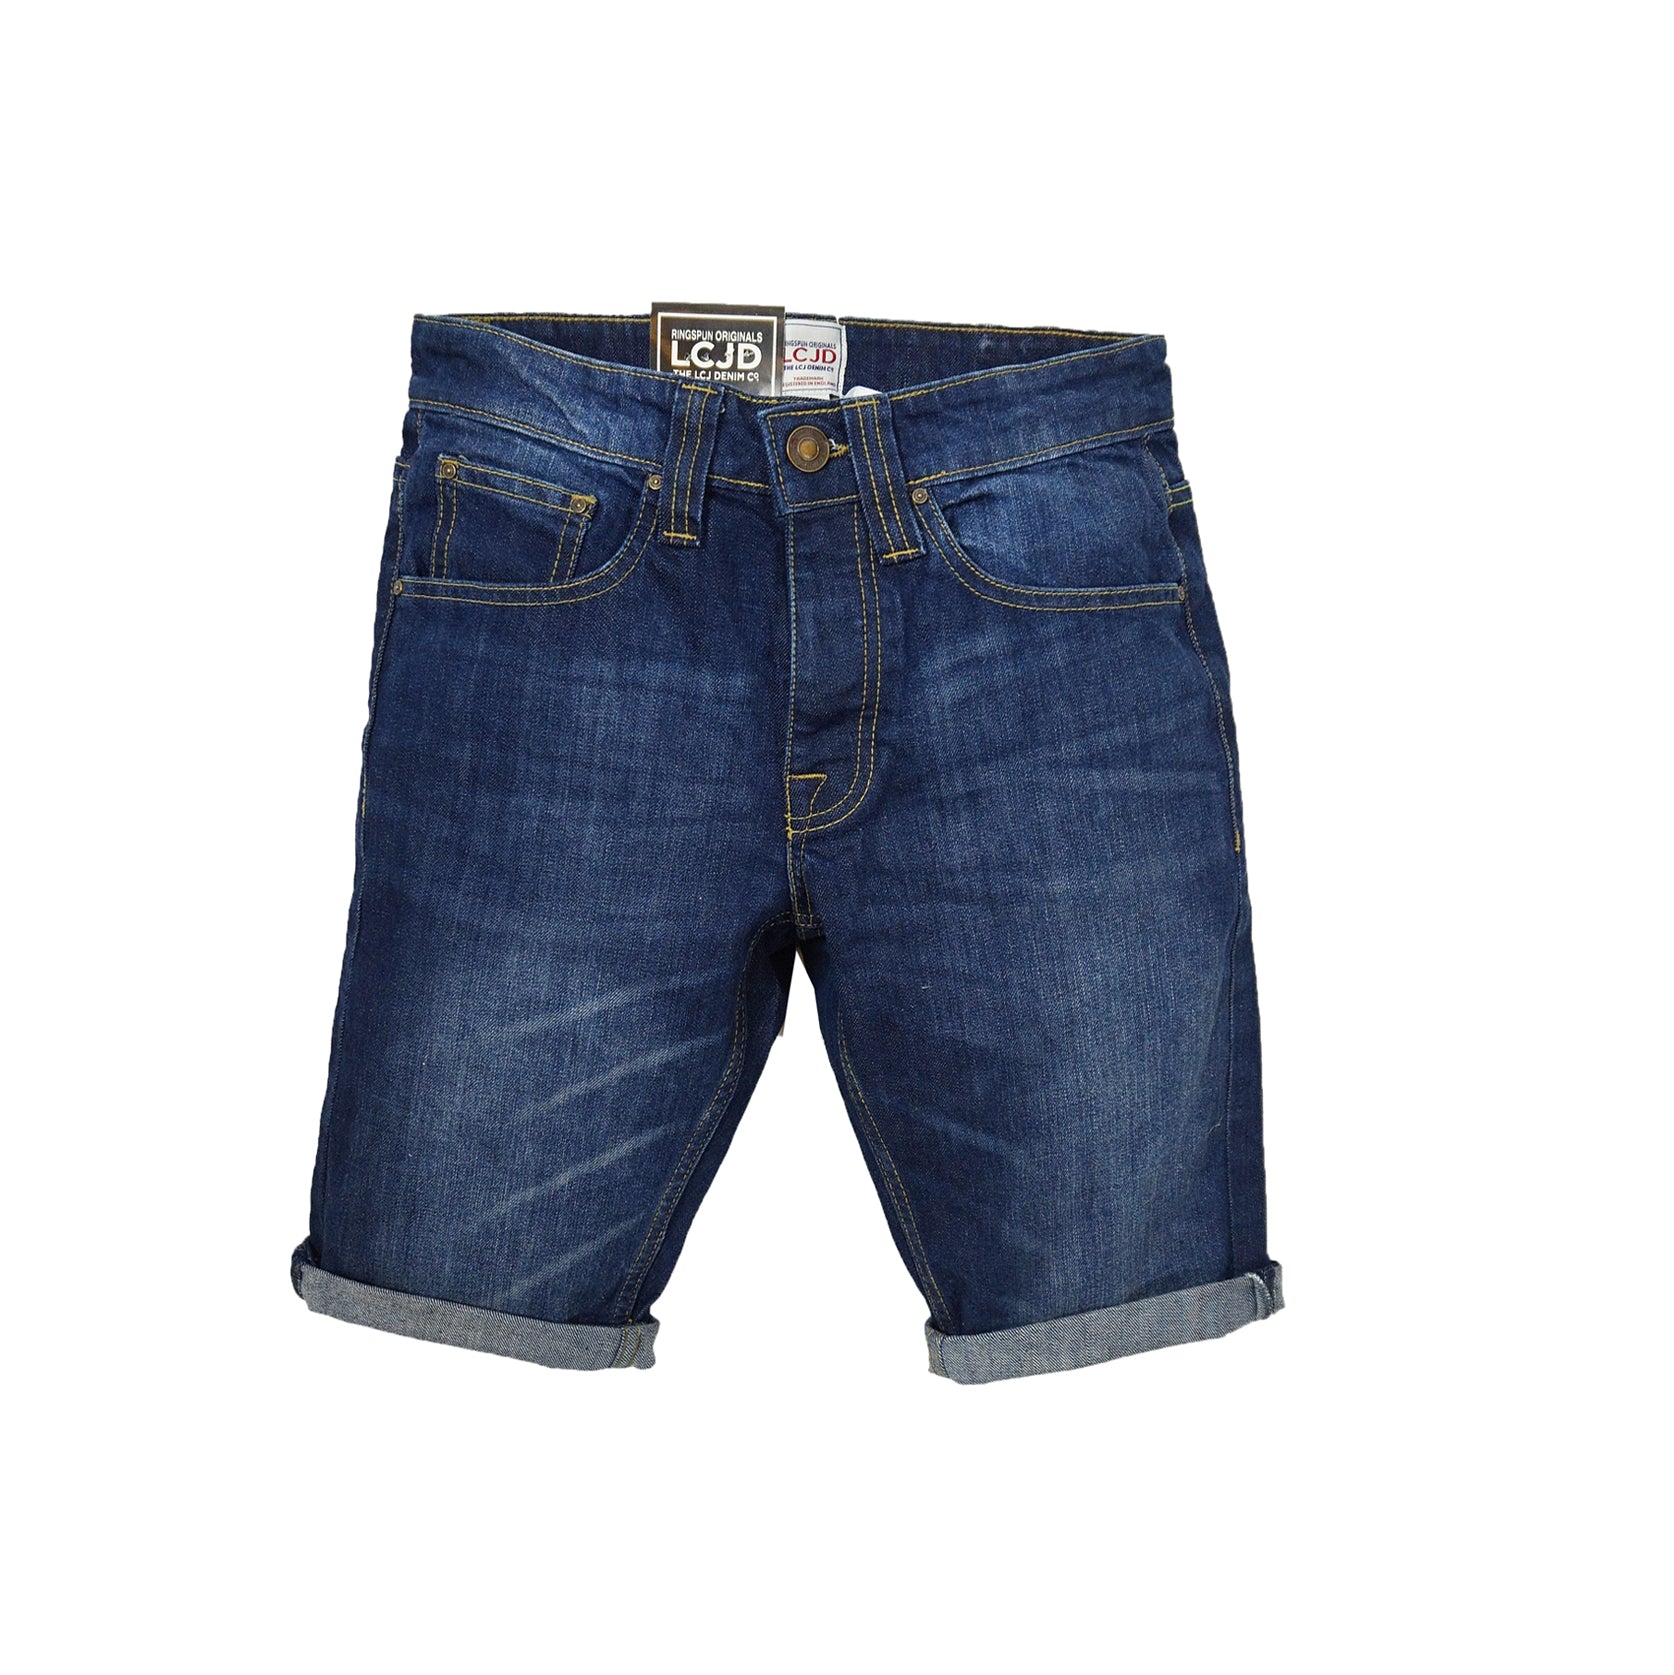 Men's Elastic Jeans Shorts | Men's Summer Denim Shorts | Men's Slim Jeans  Shorts - Jeans - Aliexpress